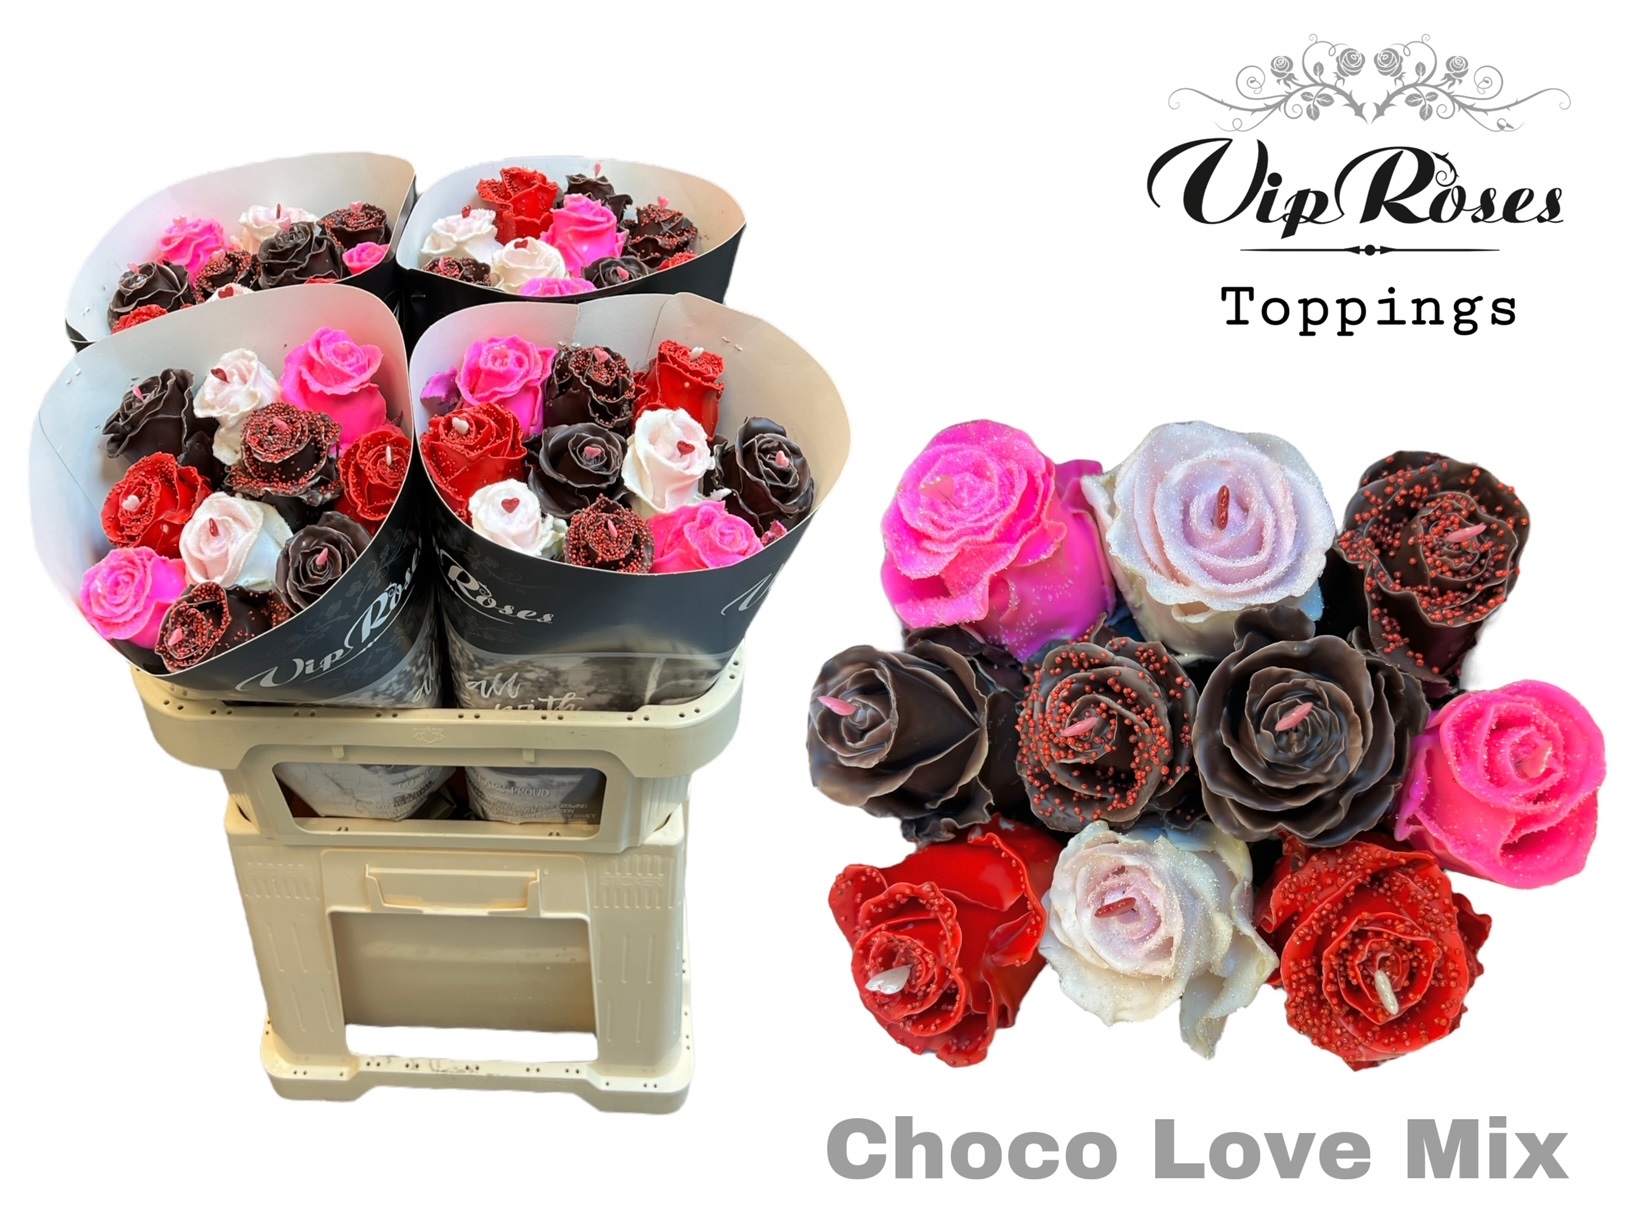 Choco Pot, Line Roses Florist & Choco